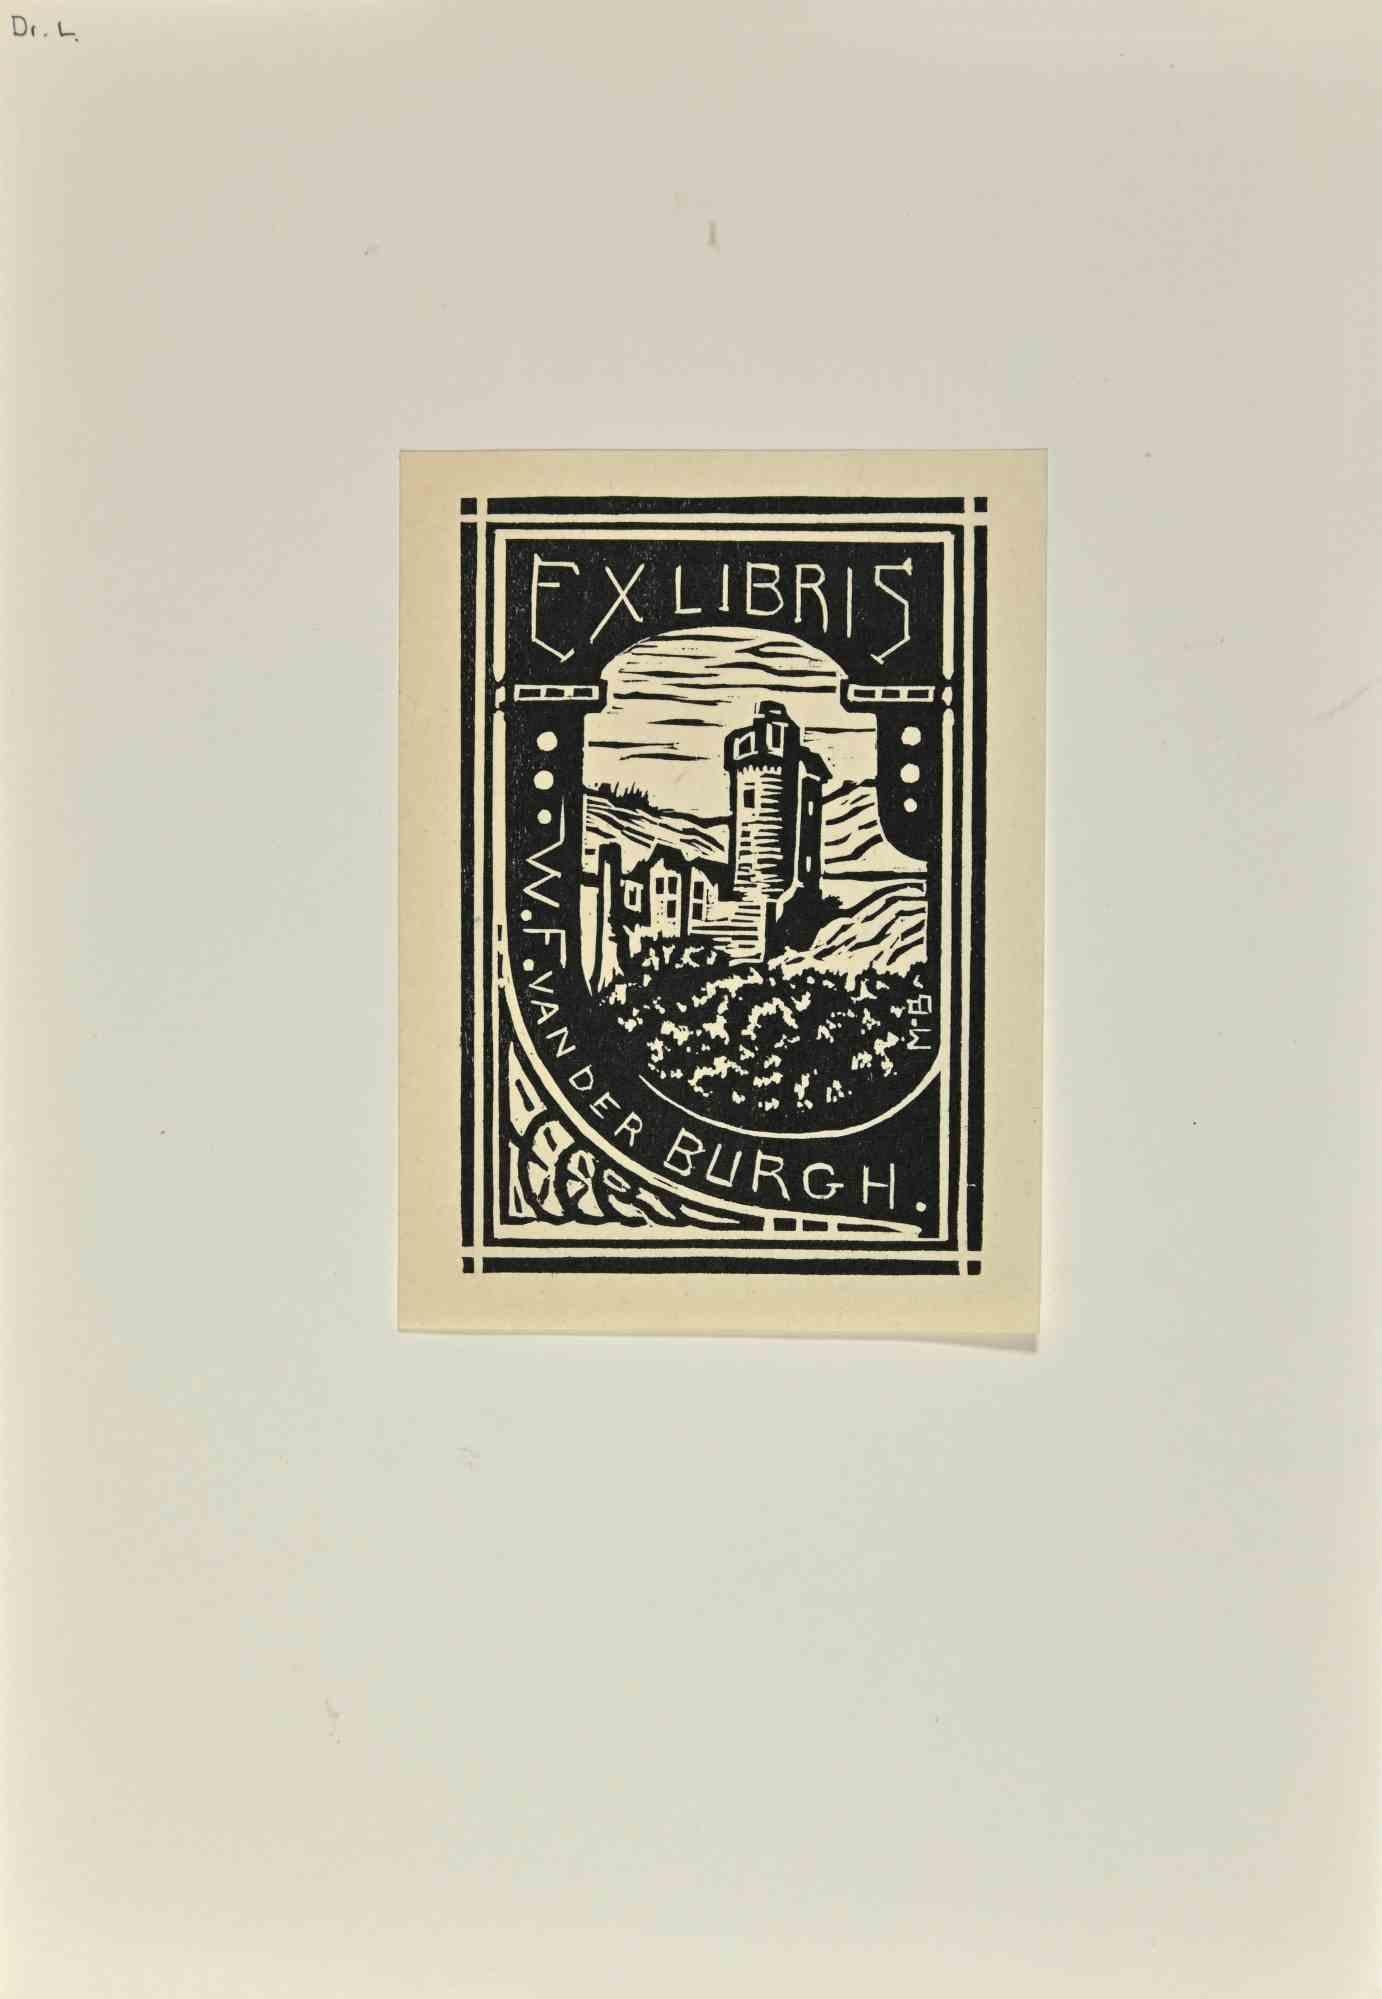  Ex Libris -Vander Burgh - Woodcut - Mid 20th Century